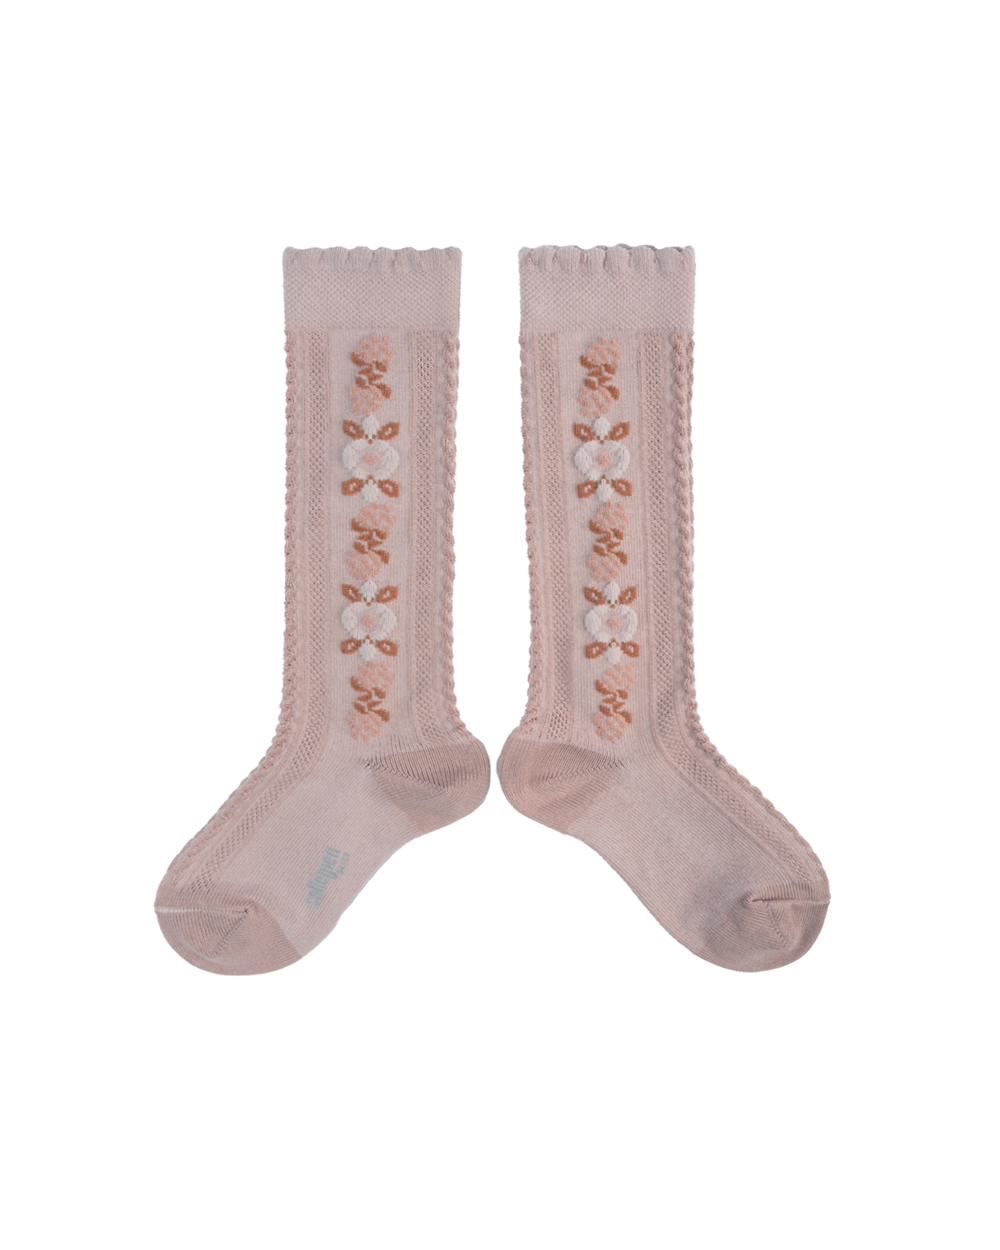 [Collégien] Dalia - Jacquard Flower Knee-high Socks- Vieux Rose [21/23]